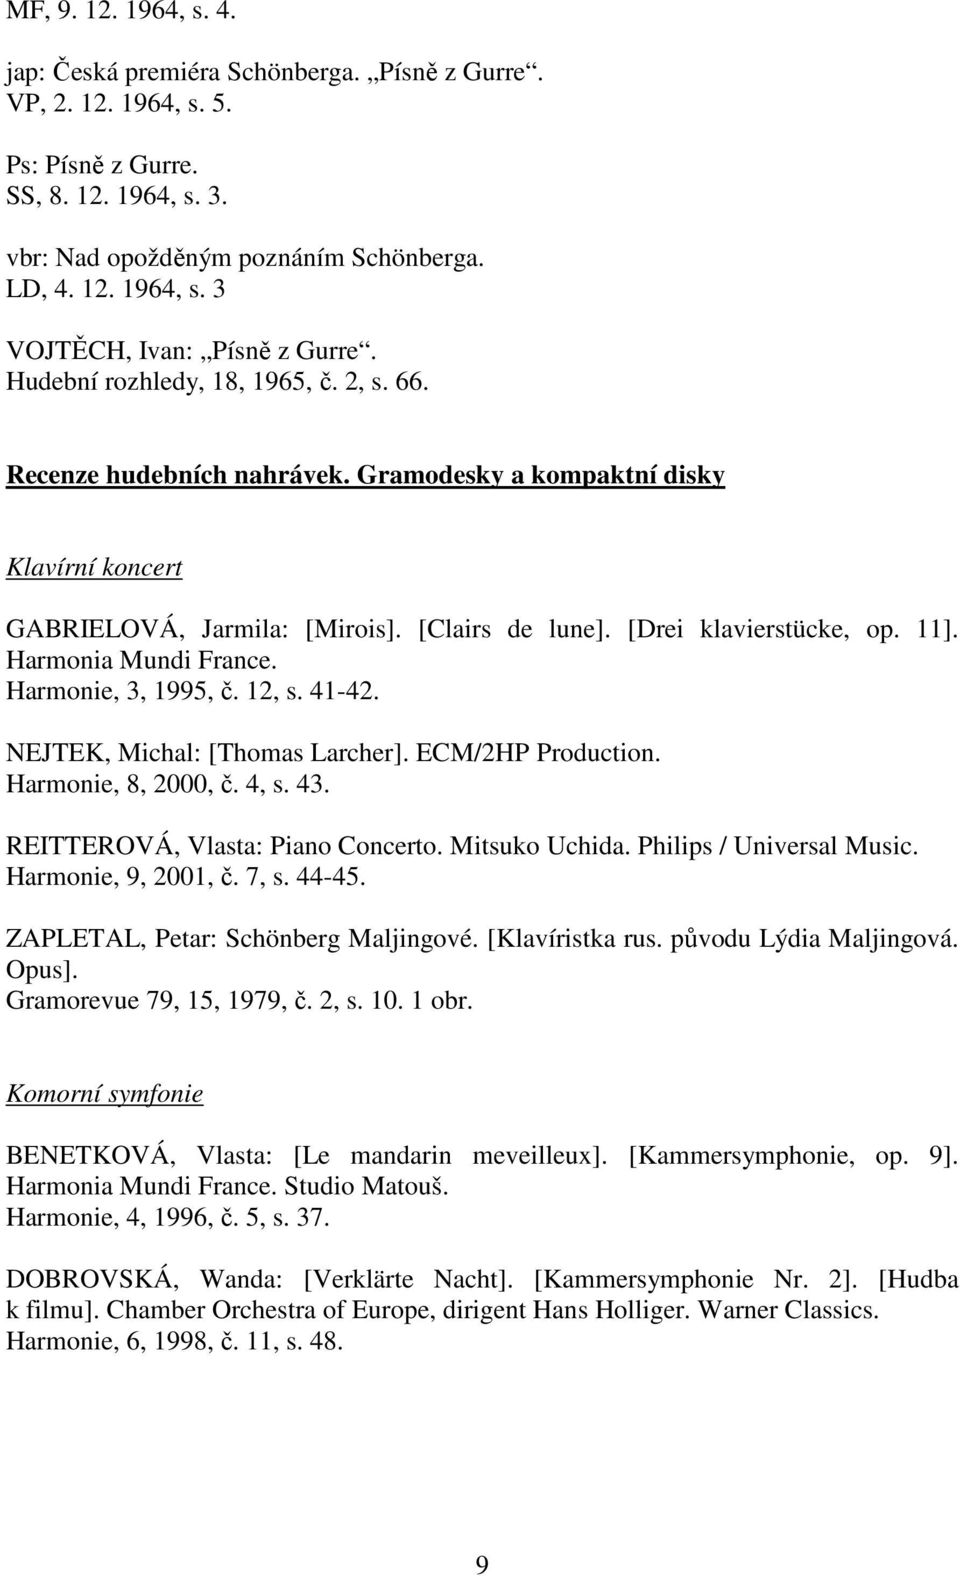 Harmonia Mundi France. Harmonie, 3, 1995, č. 12, s. 41-42. NEJTEK, Michal: [Thomas Larcher]. ECM/2HP Production. Harmonie, 8, 2000, č. 4, s. 43. REITTEROVÁ, Vlasta: Piano Concerto. Mitsuko Uchida.